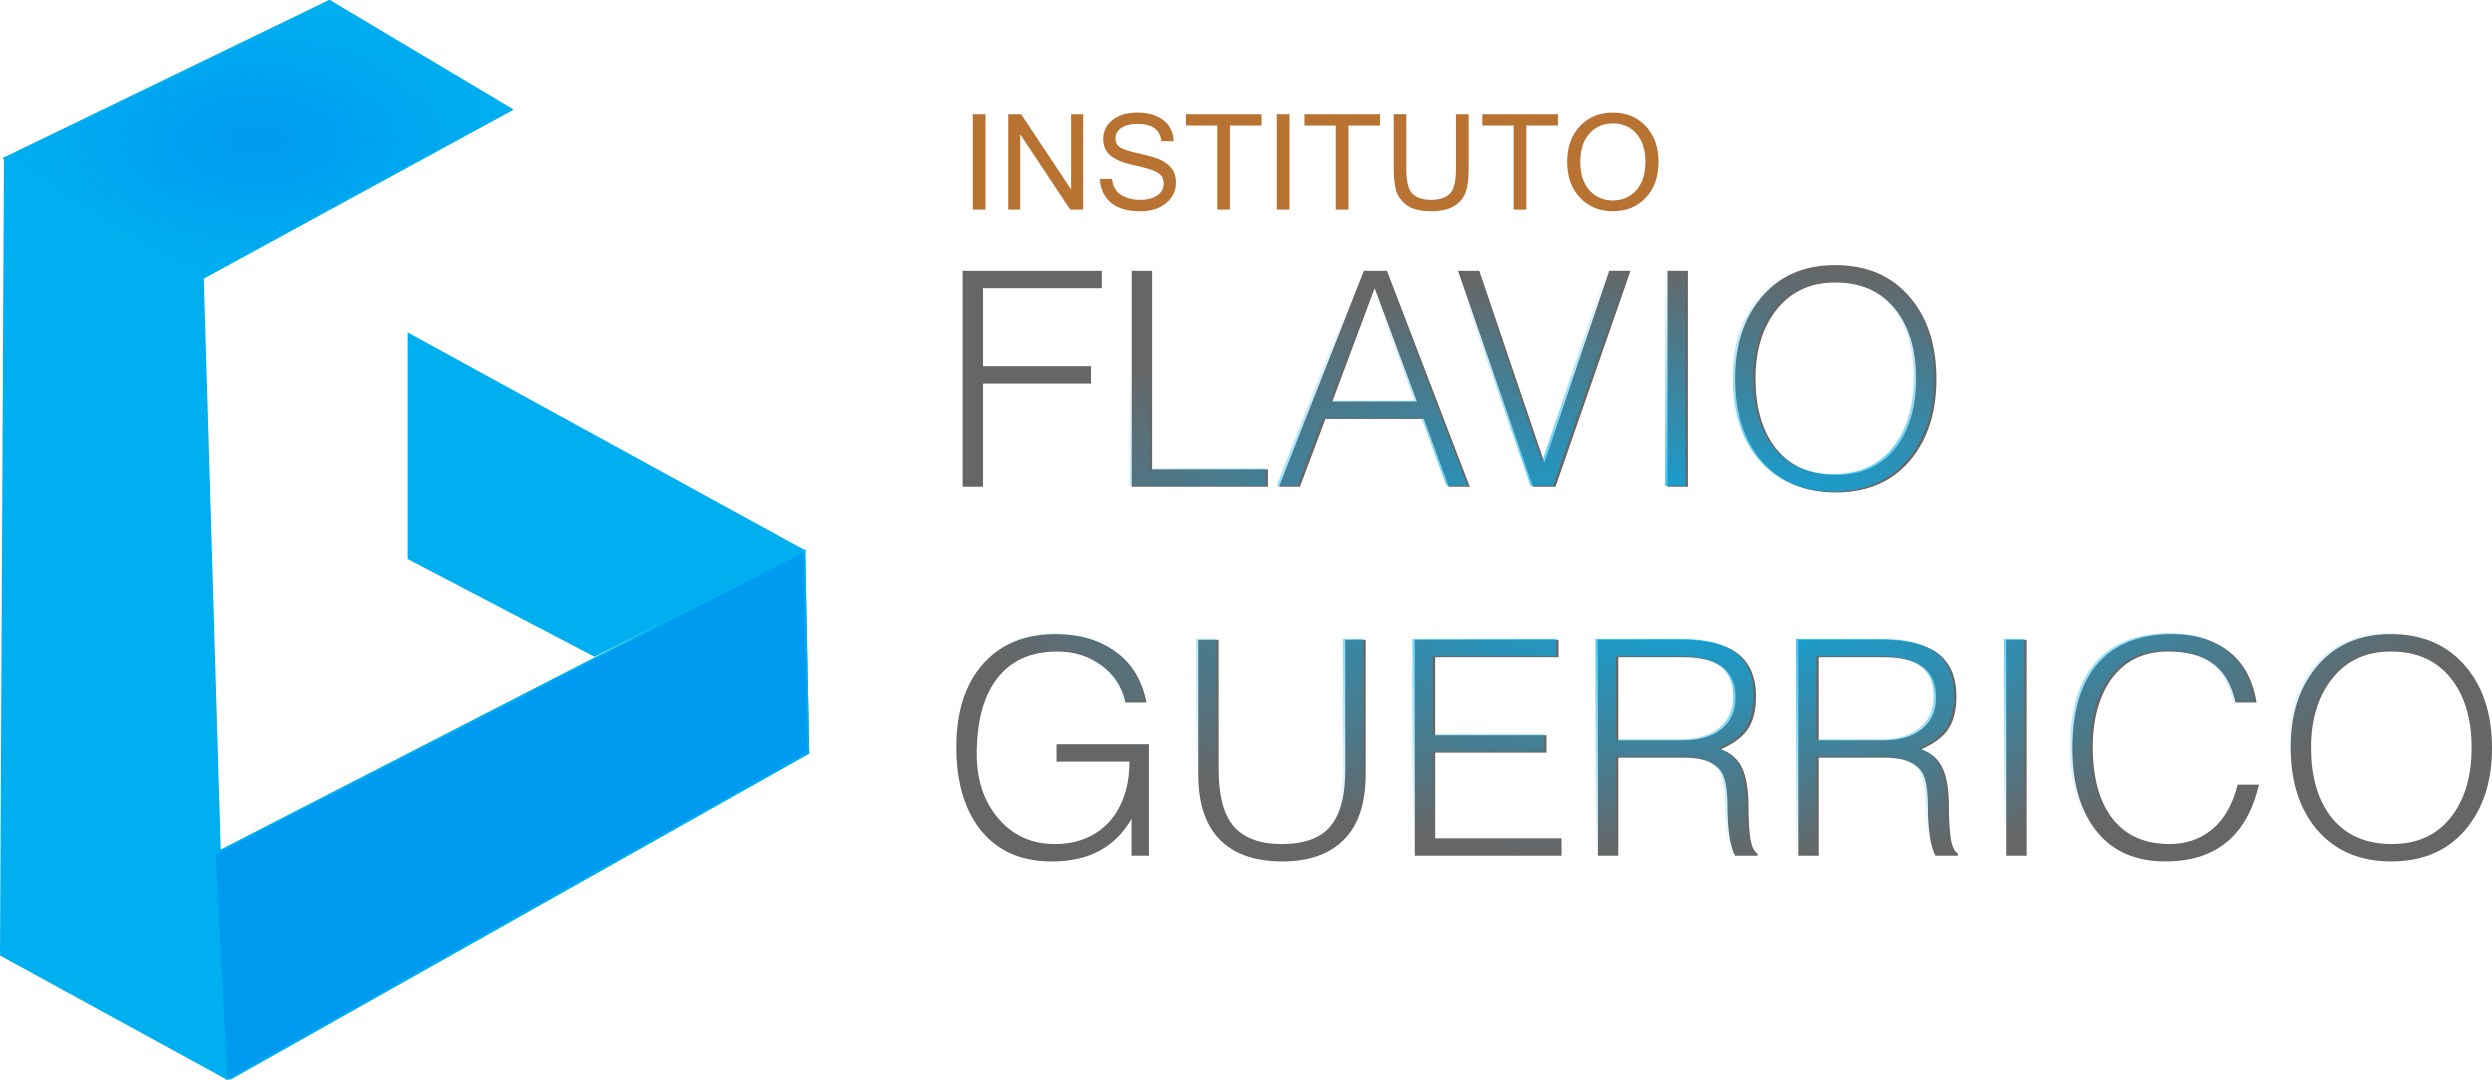 IFG - Instituto Flavio Guerrico